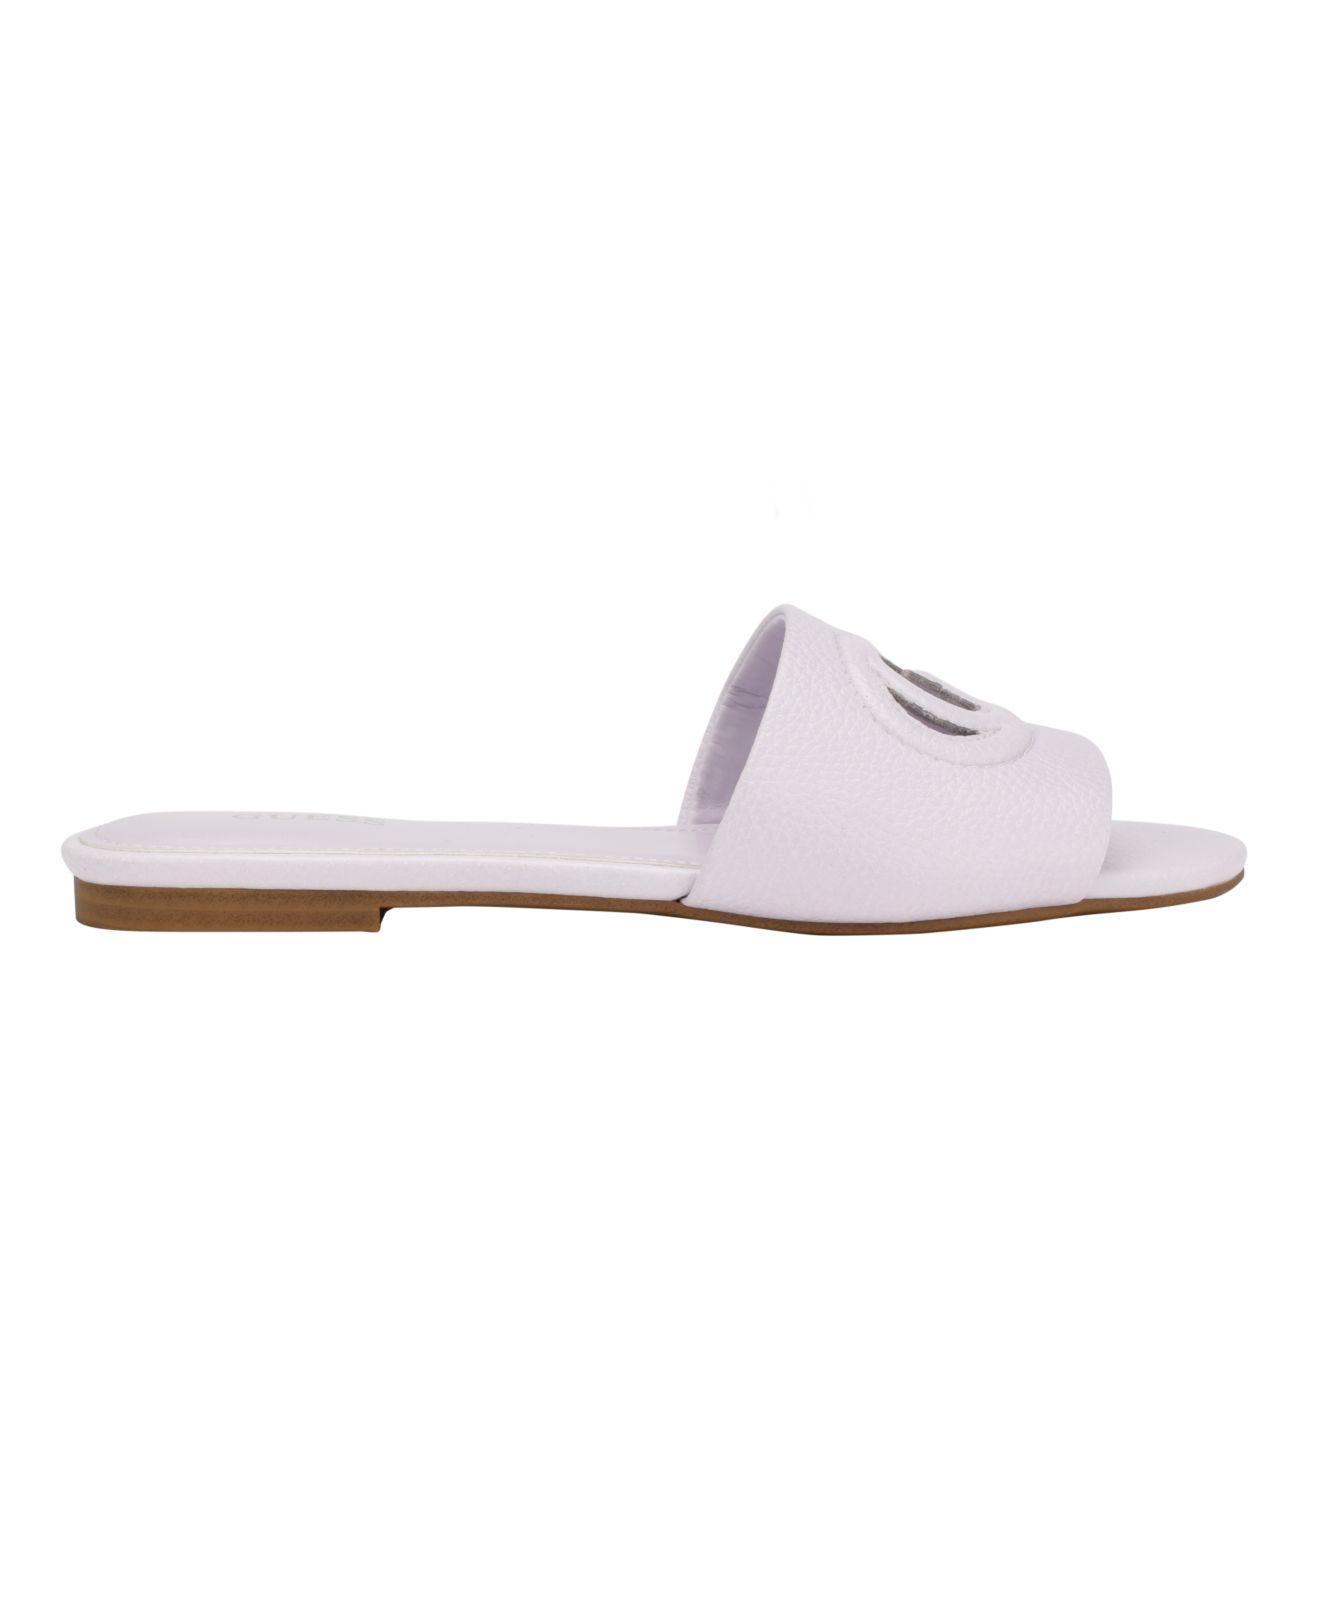 Cutout Logo Sandals in White | Lyst